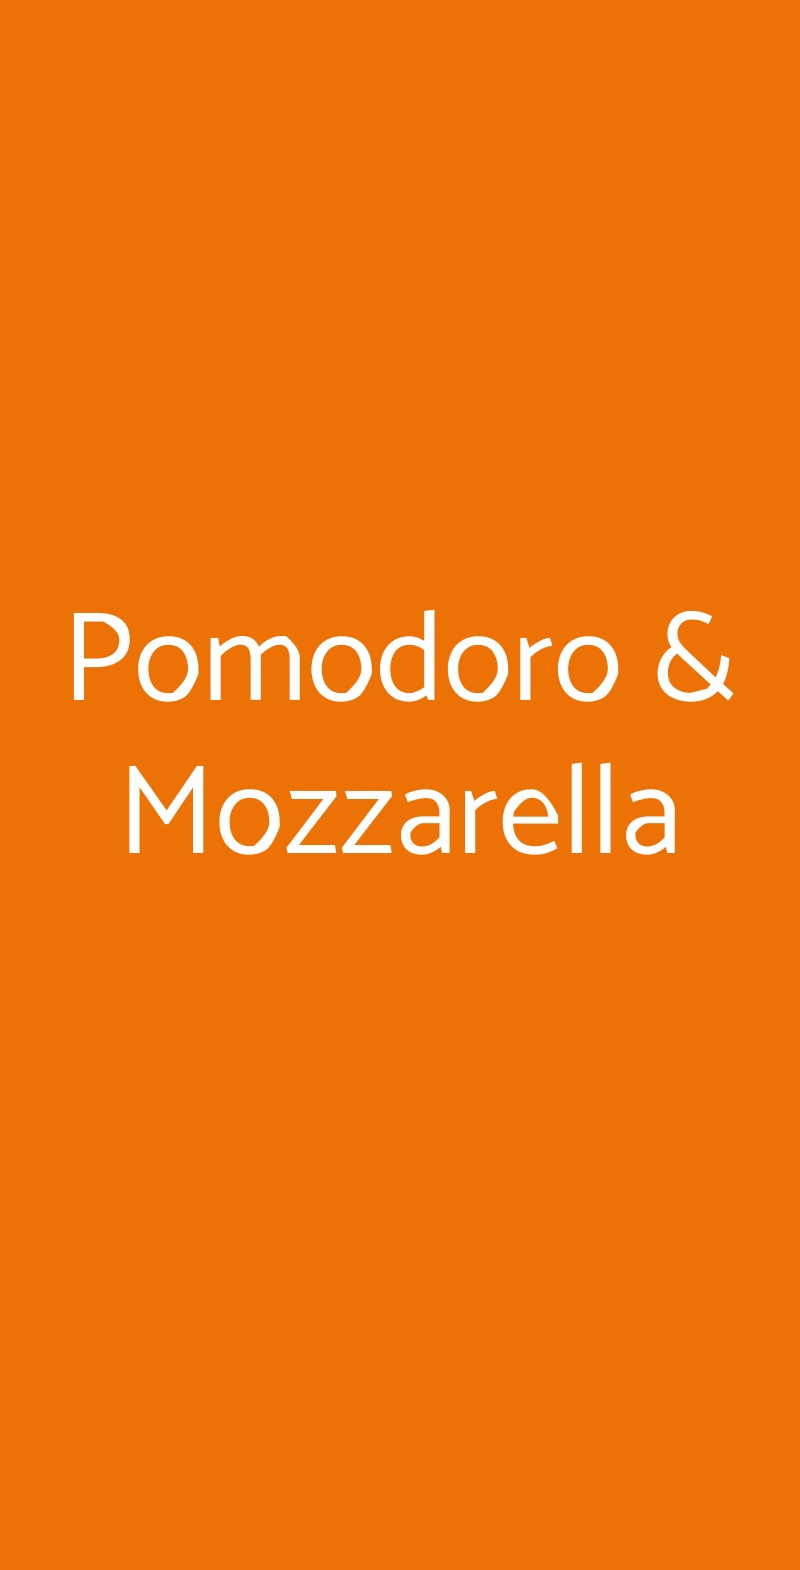 Pomodoro & Mozzarella Roma menù 1 pagina